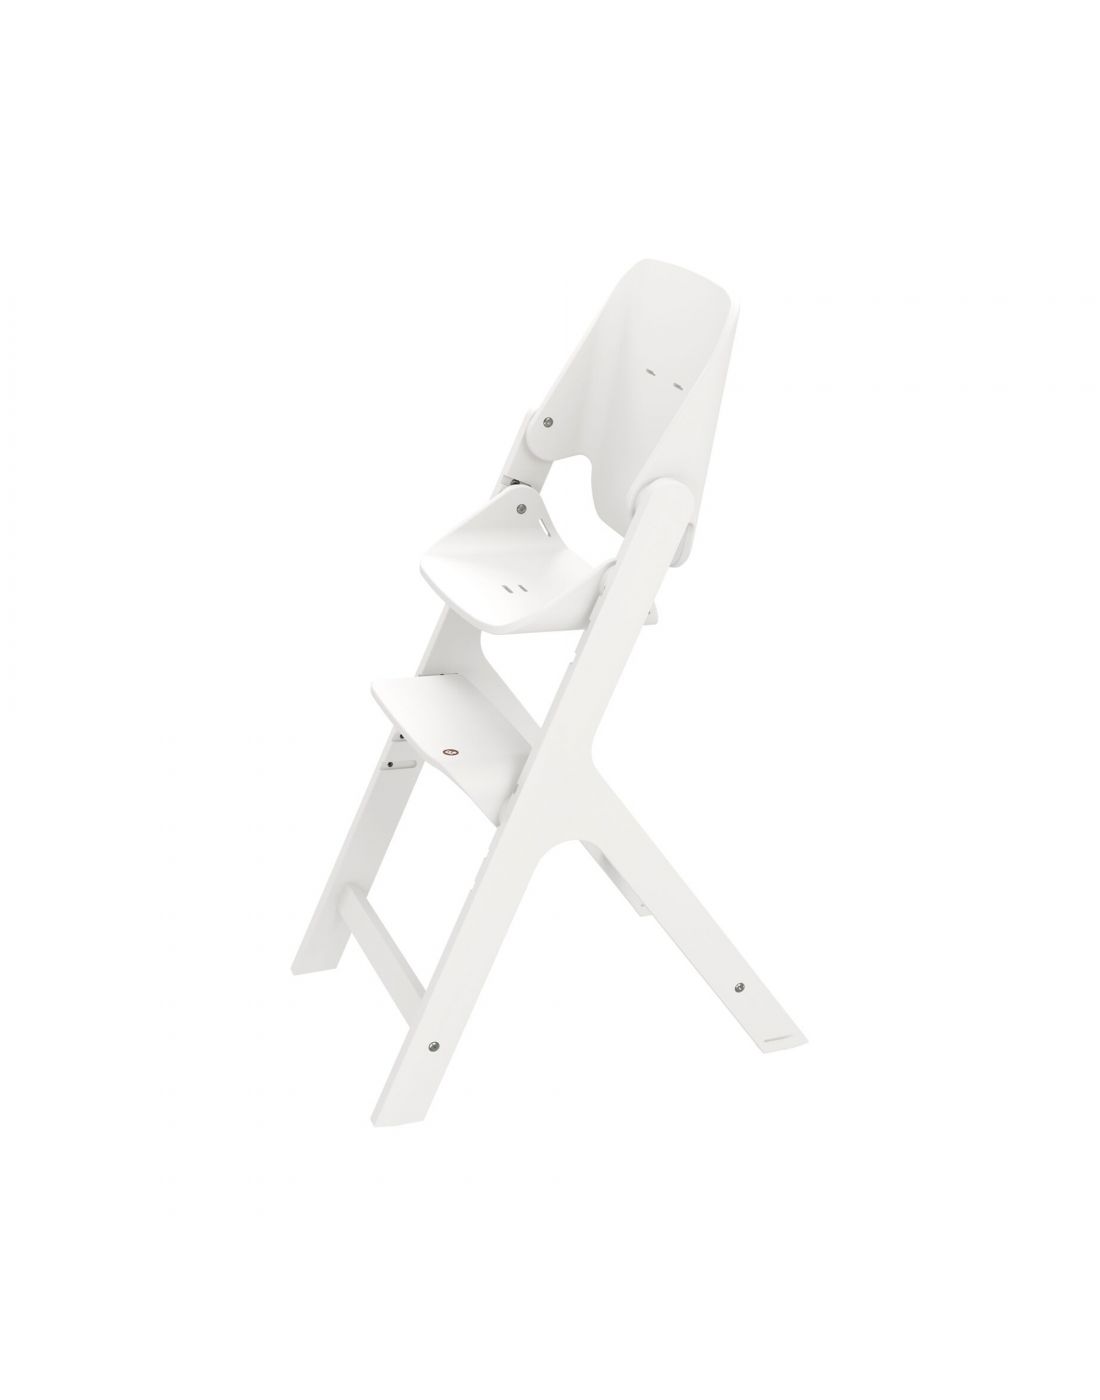 Maxi Cosi Nesta High Chair White